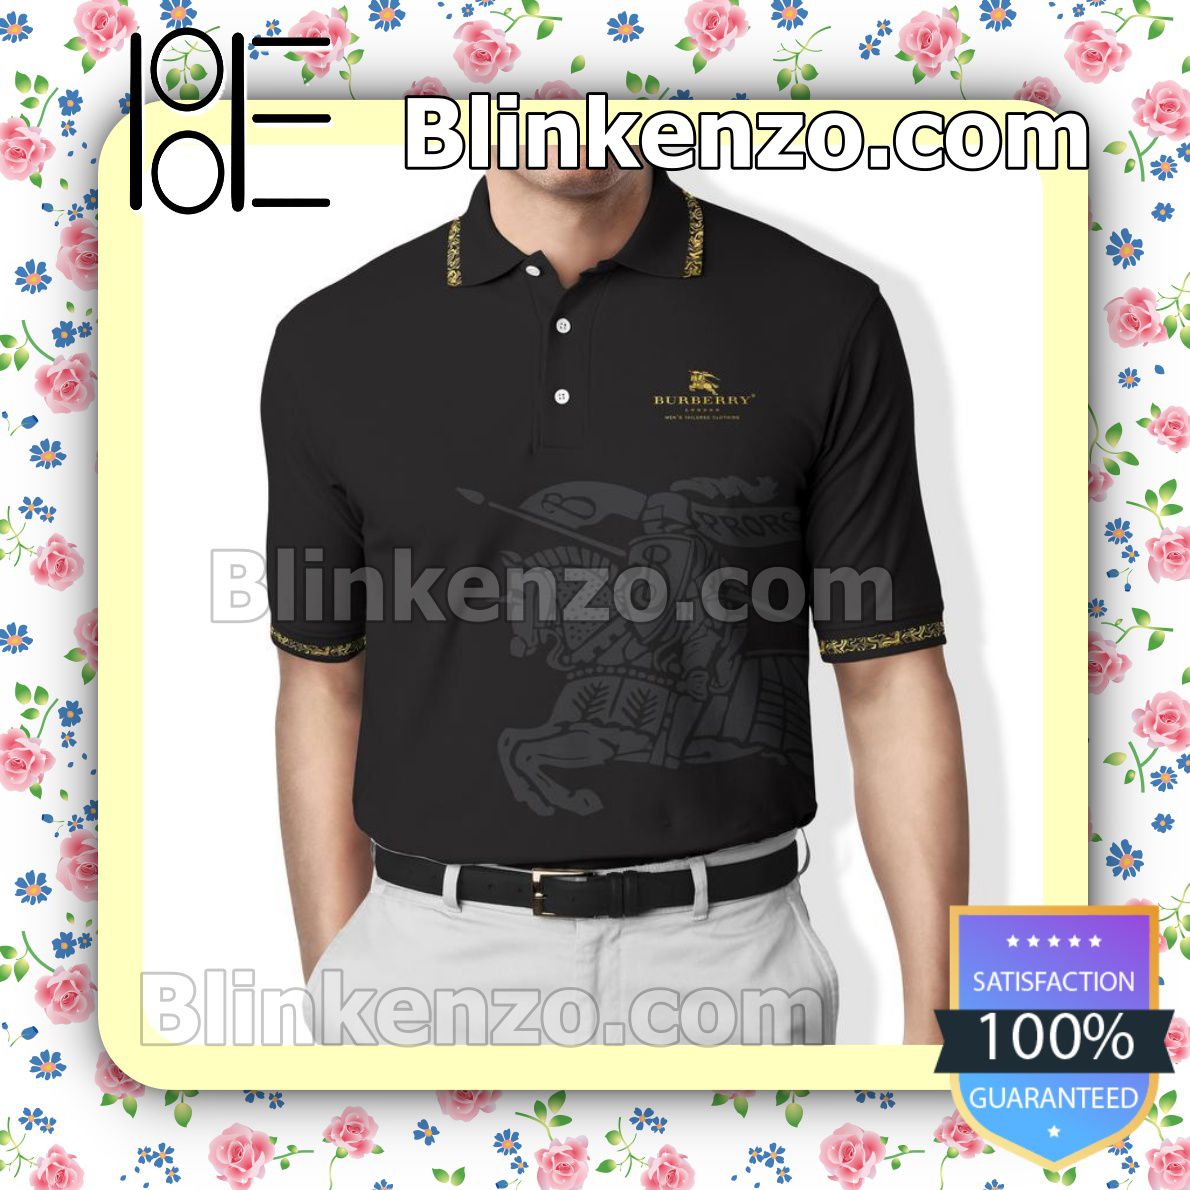 Burberry Prorsum Luxury Brand Basic Black Embroidered Polo Shirts